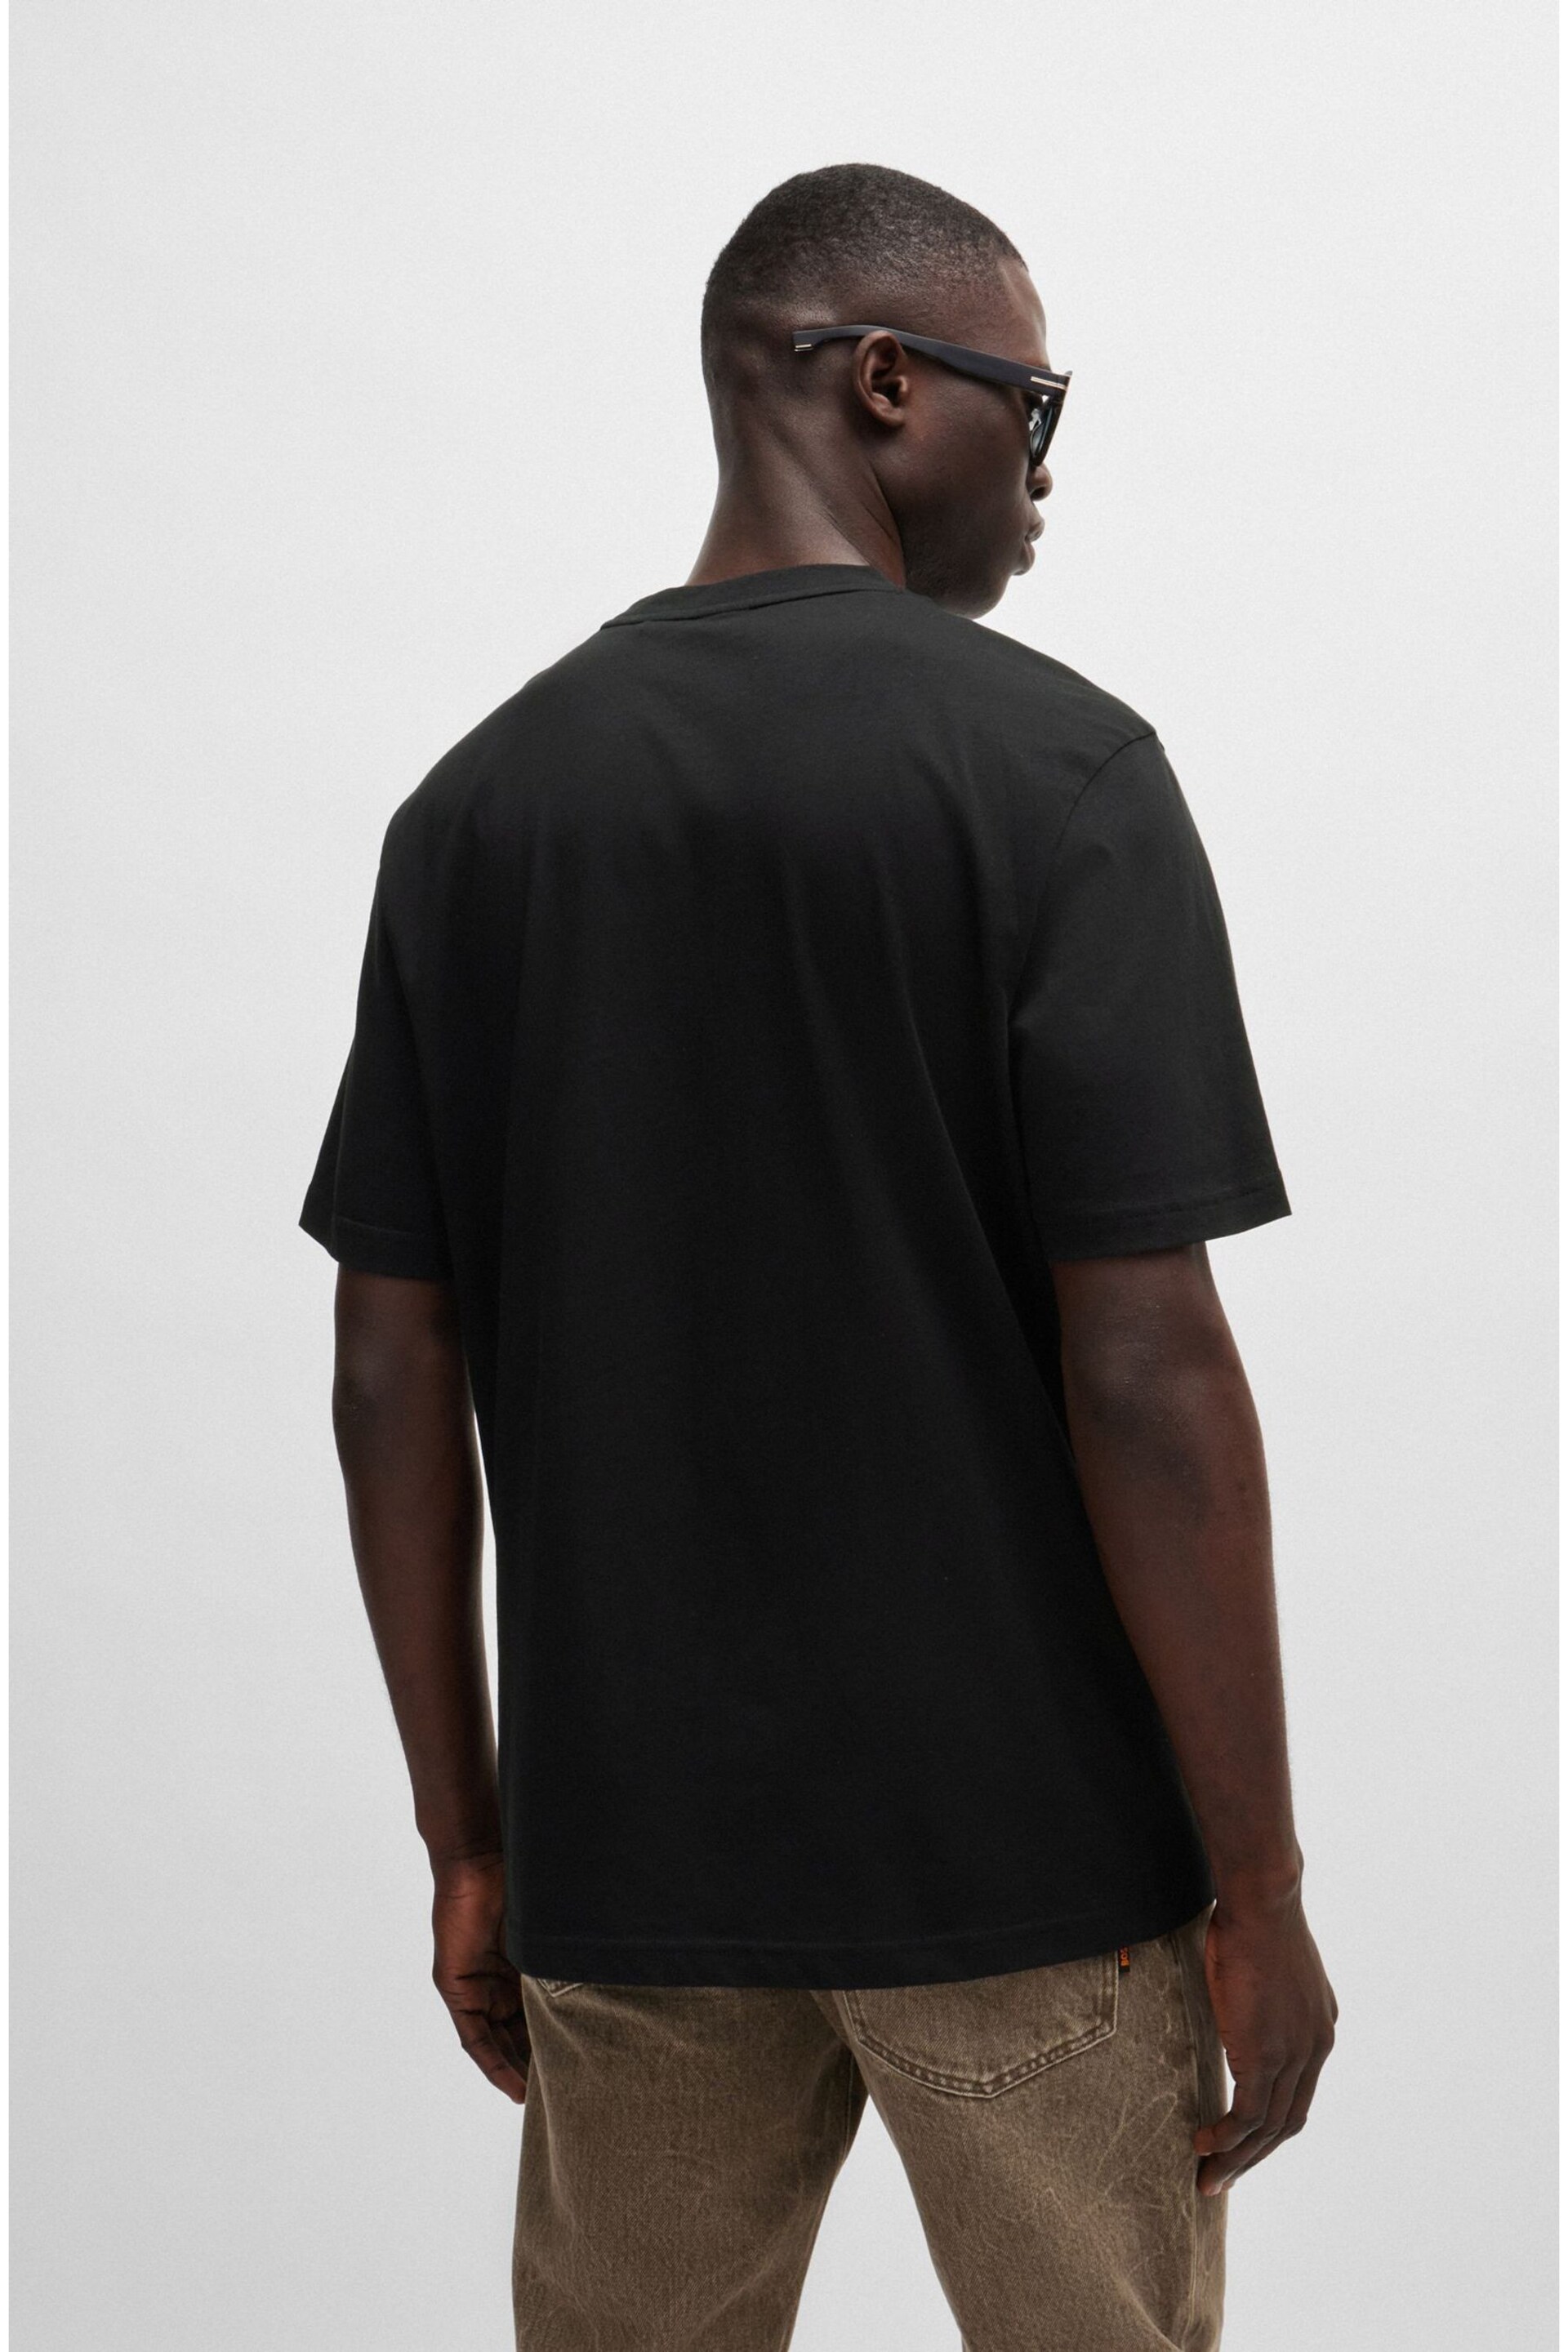 BOSS Black Music Graphic Print T-Shirt - Image 3 of 5